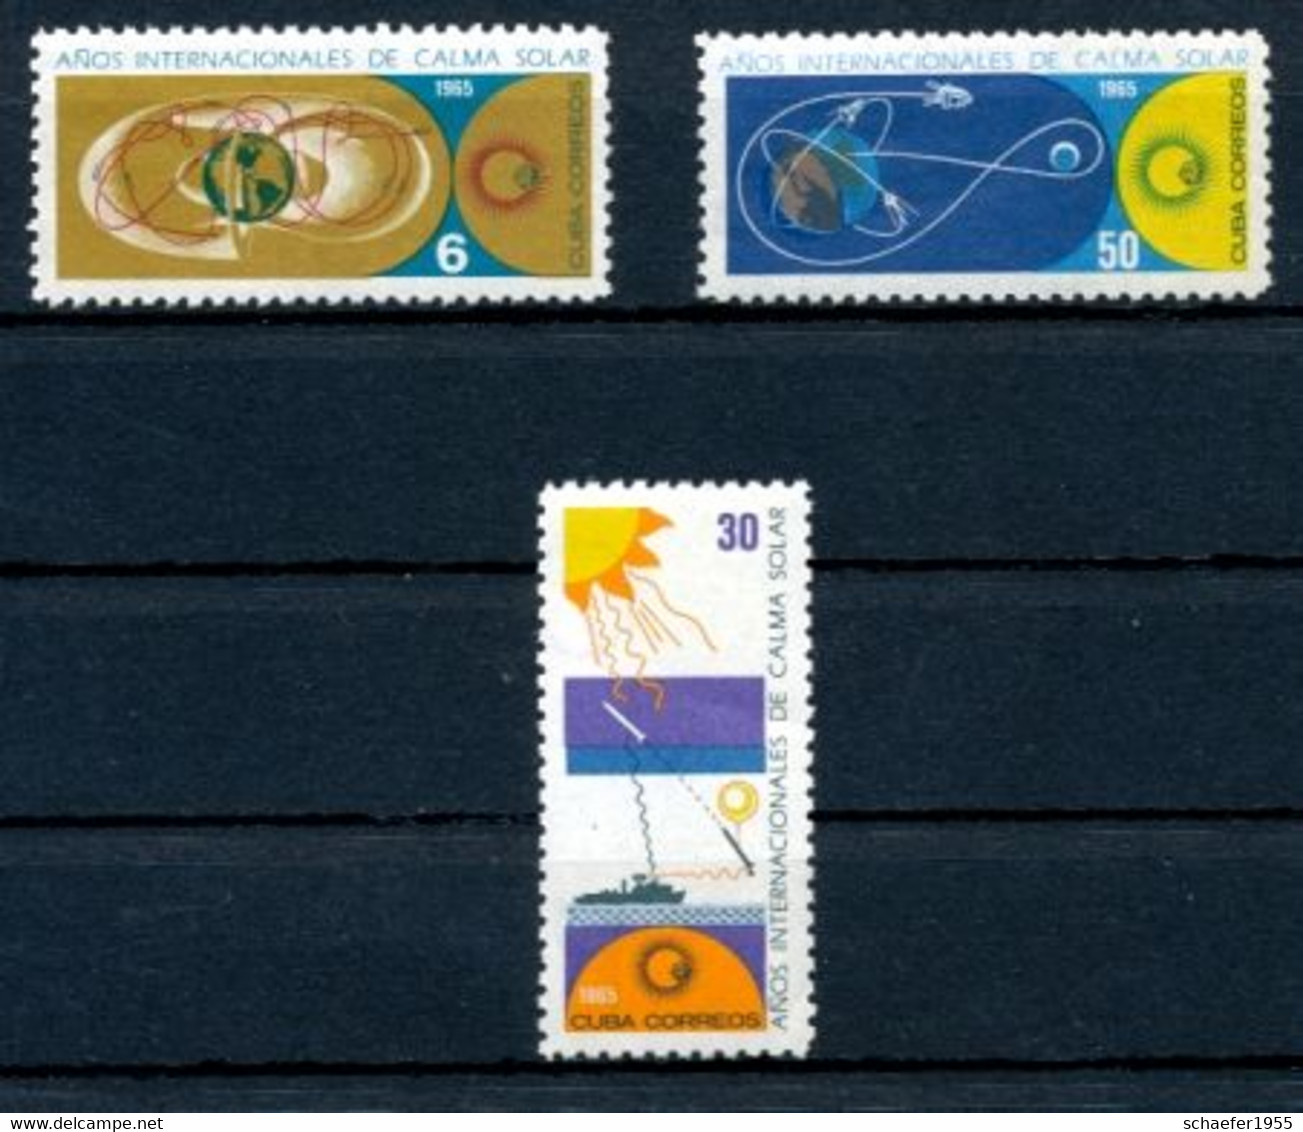 Cuba, Kuba 1965 Calma Solar 2x FDC + Stamps - América Del Norte